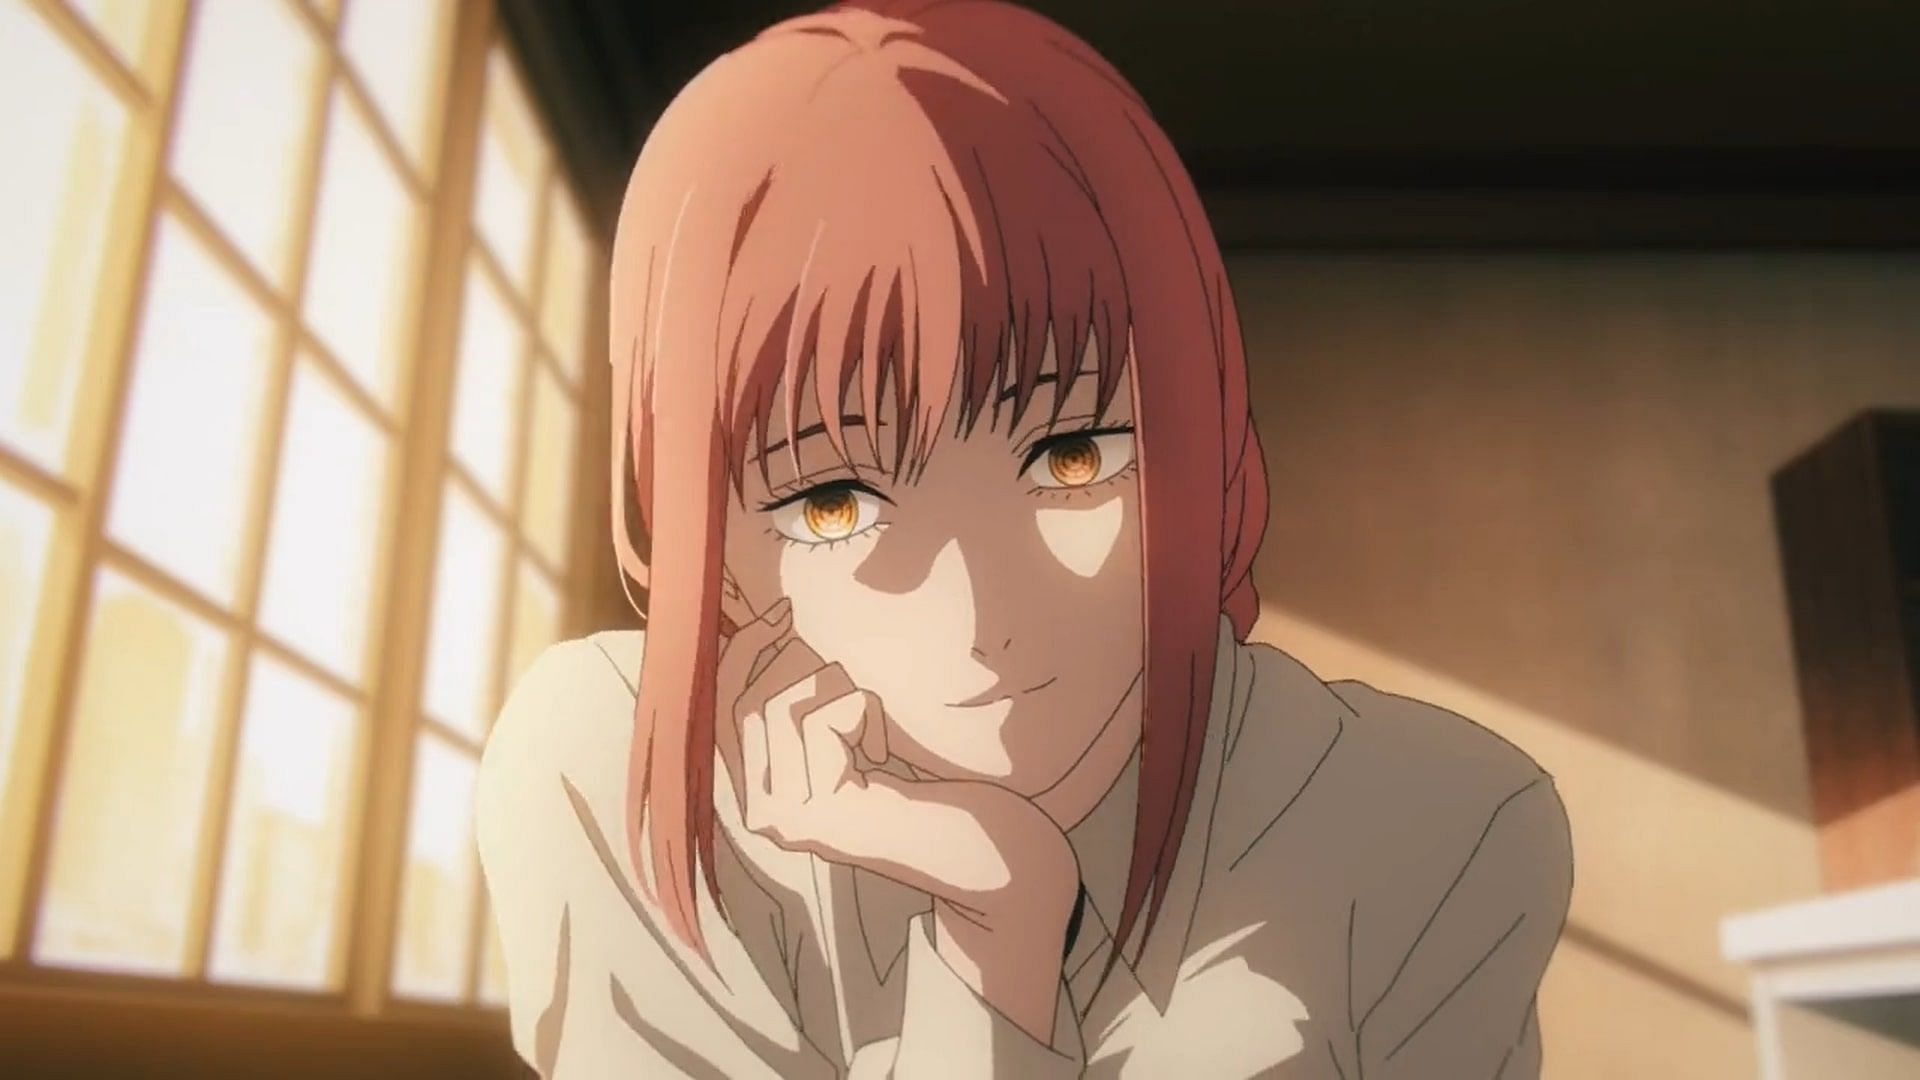 Makima as seen in the anime (Image via MAPPA)